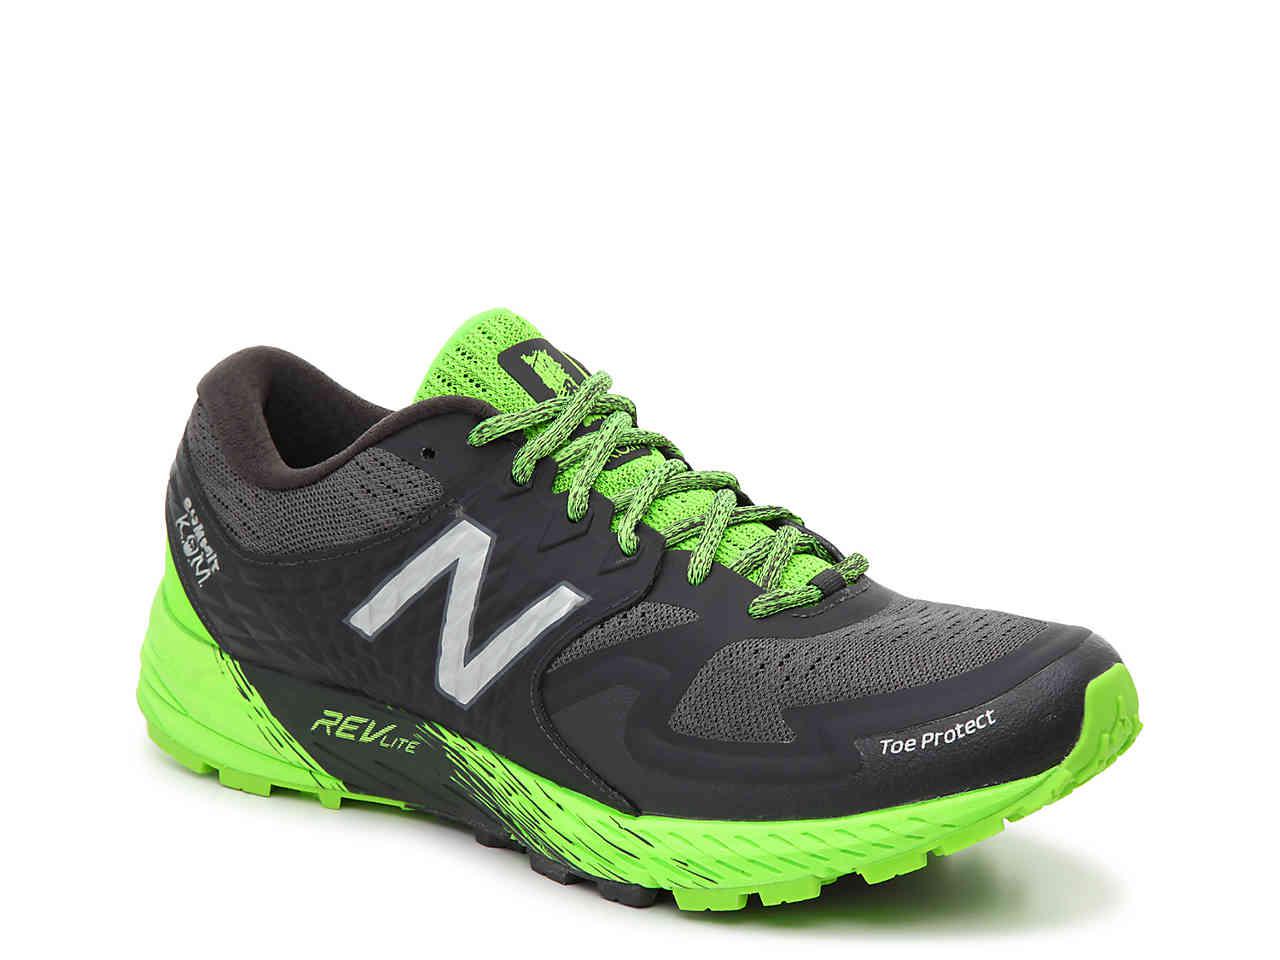 New Balance Summit Kom Trail Running Shoes in Black/Neon Green (Green ...